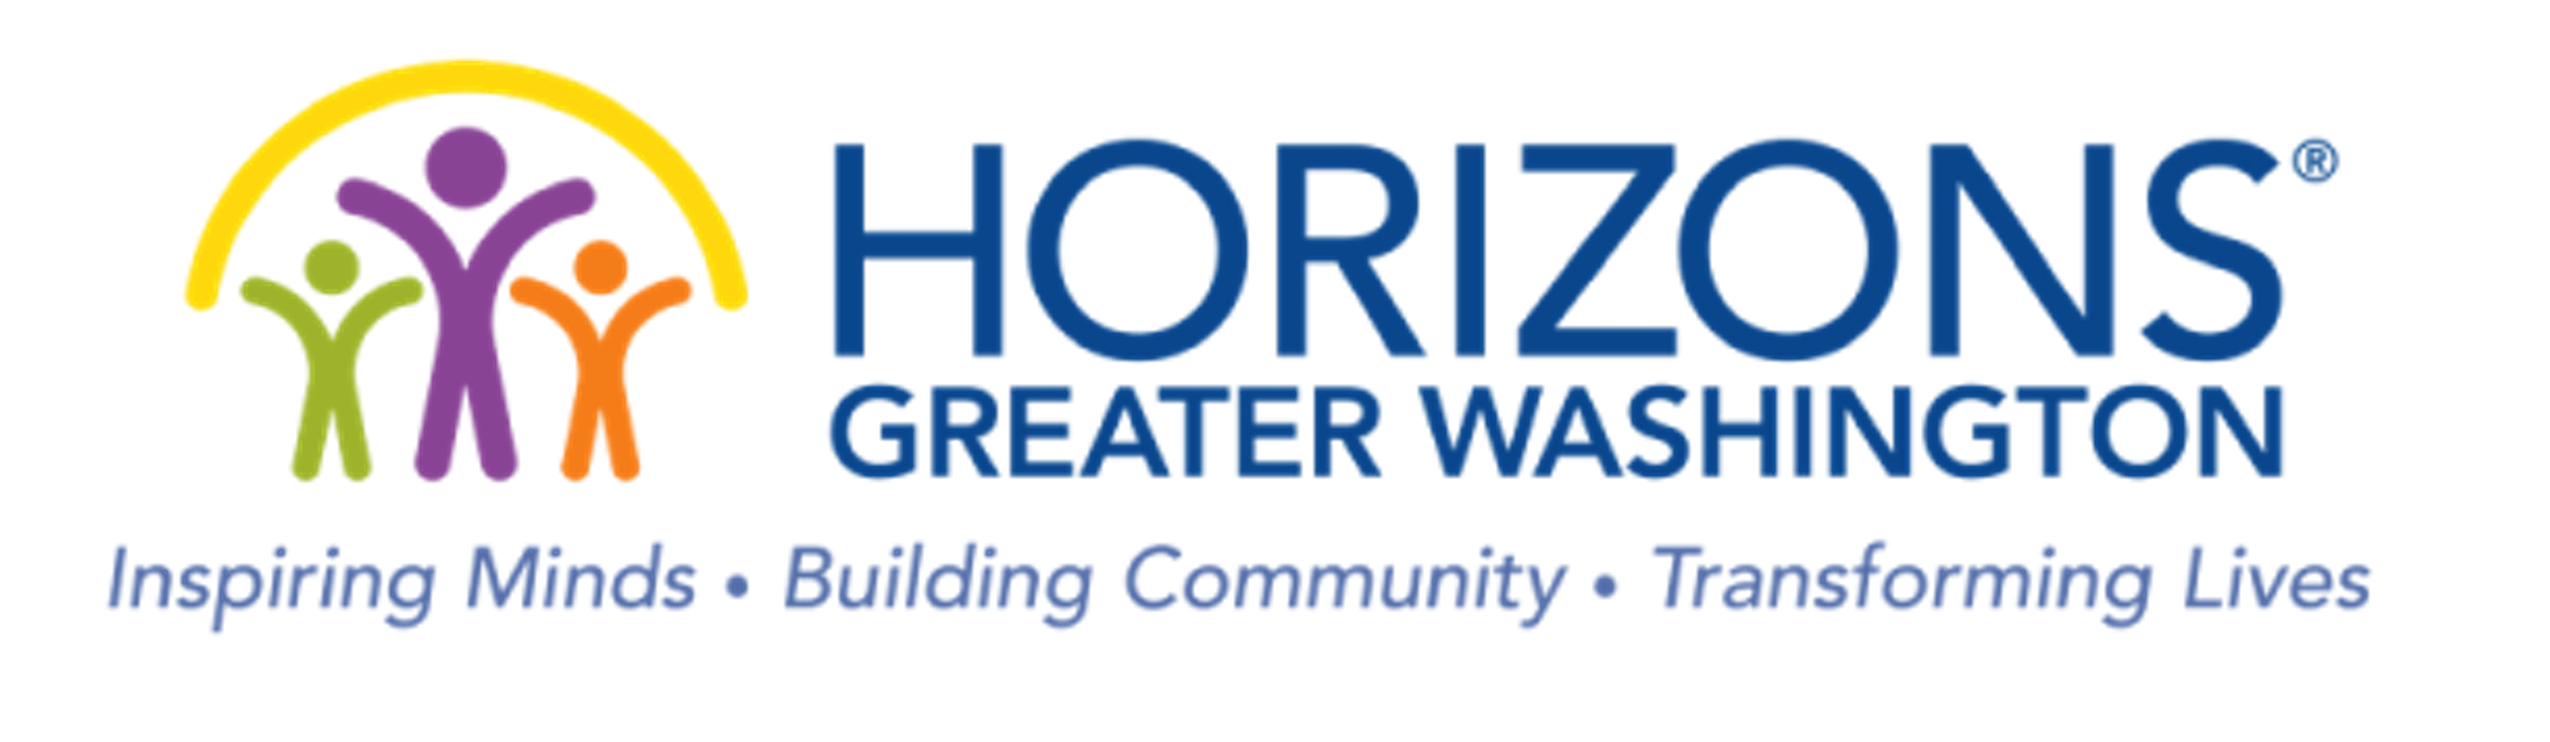 Horizons Greater Washington Logo Vertical Crop